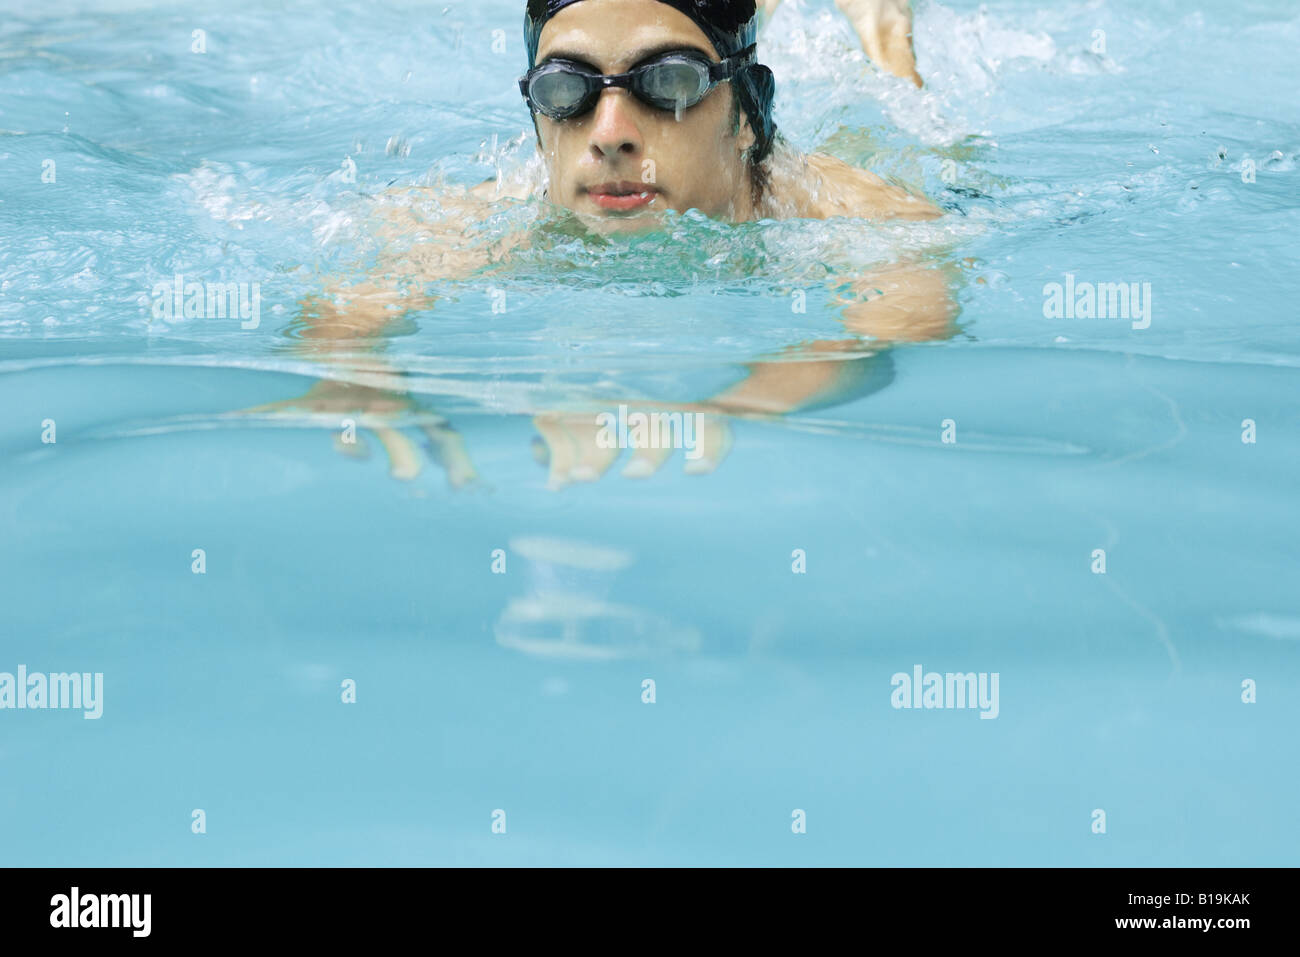 Man swimming in pool, wearing goggles Stock Photo